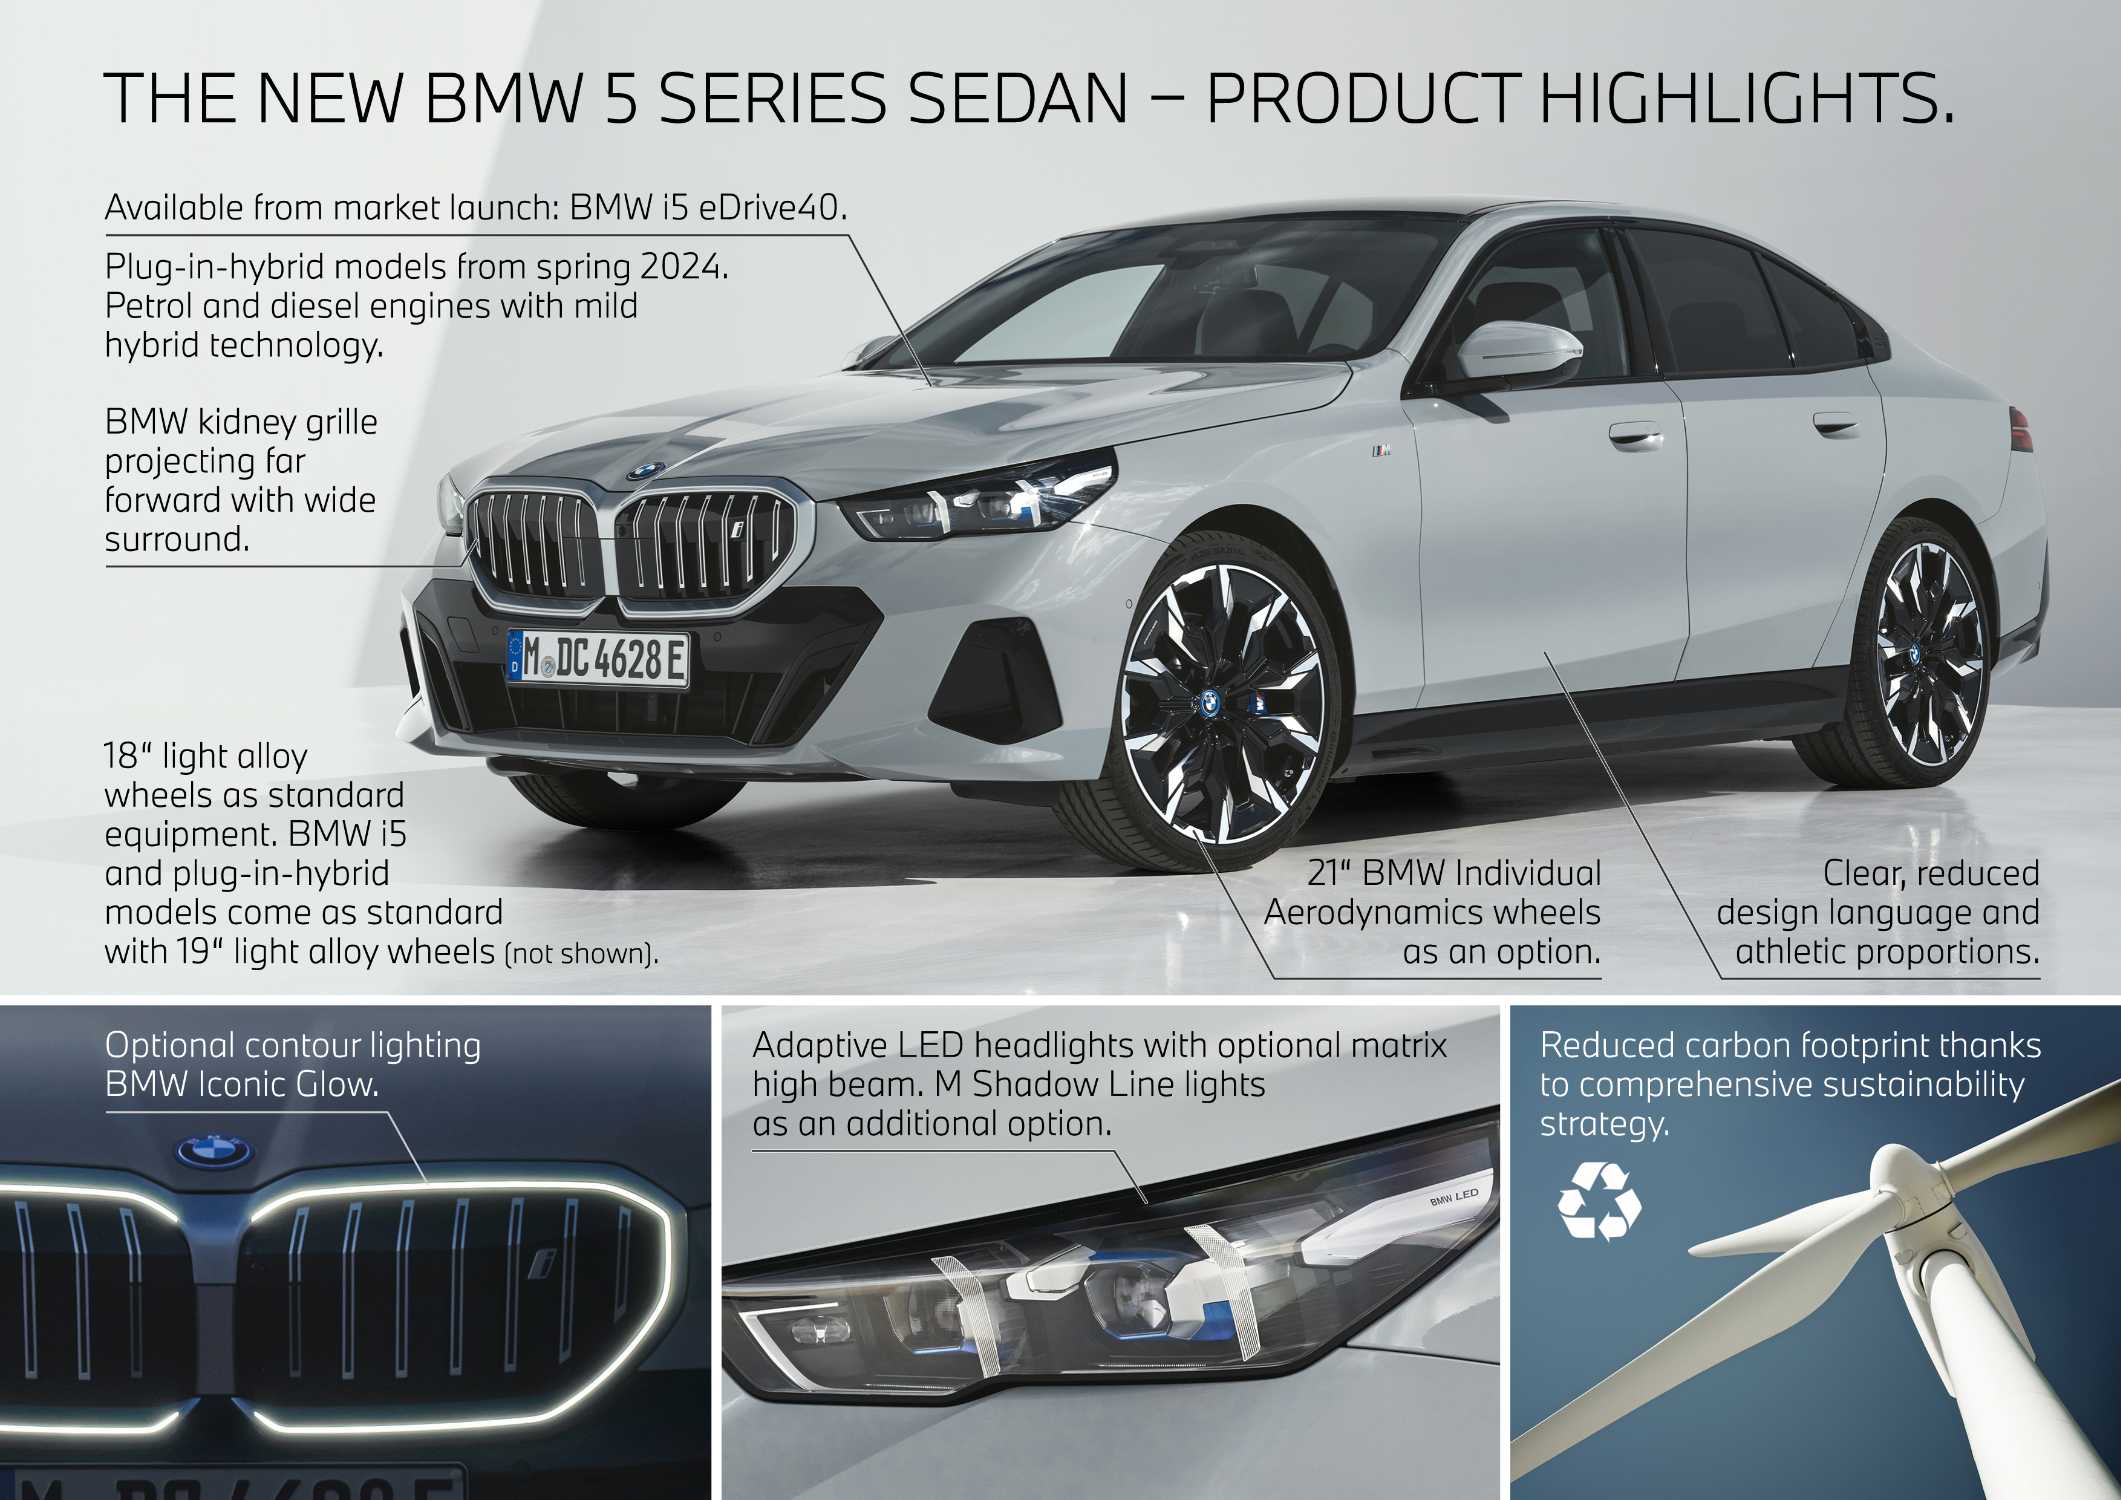 The new BMW 5 Series Sedan - Infographic (05/2023).